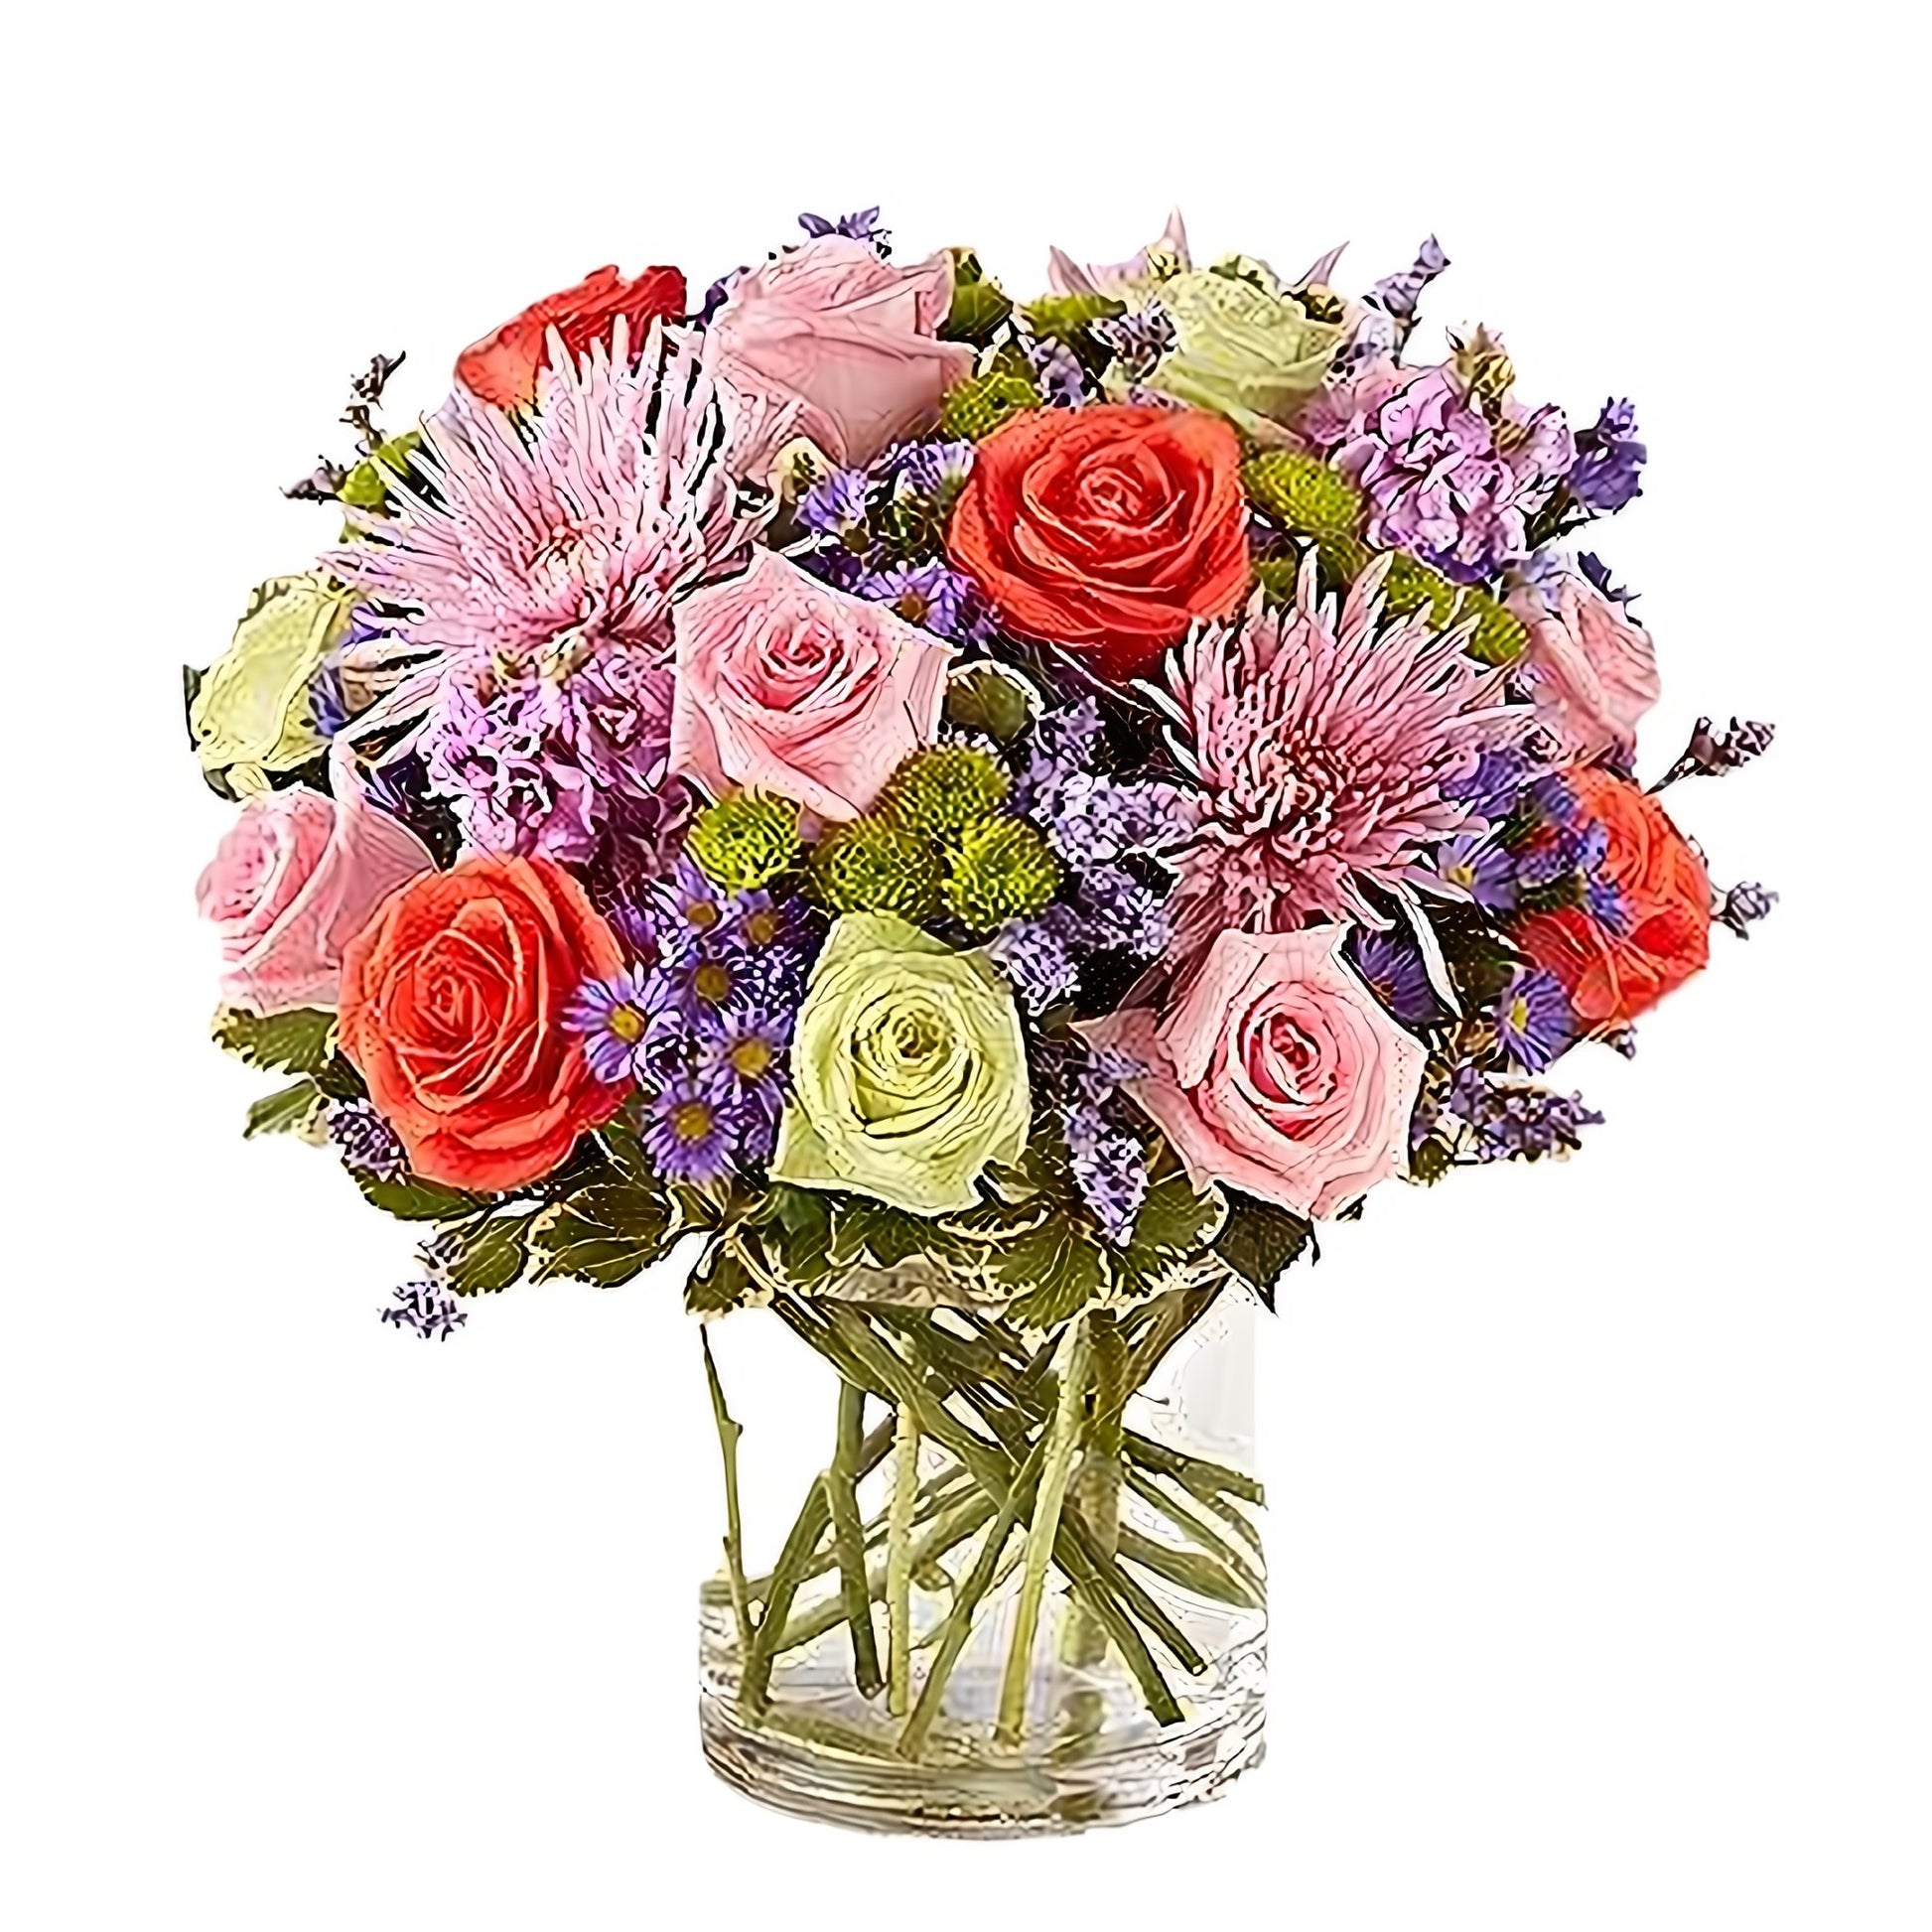 Beauty in Abundance - Floral Arrangement - Queens Flower Delivery